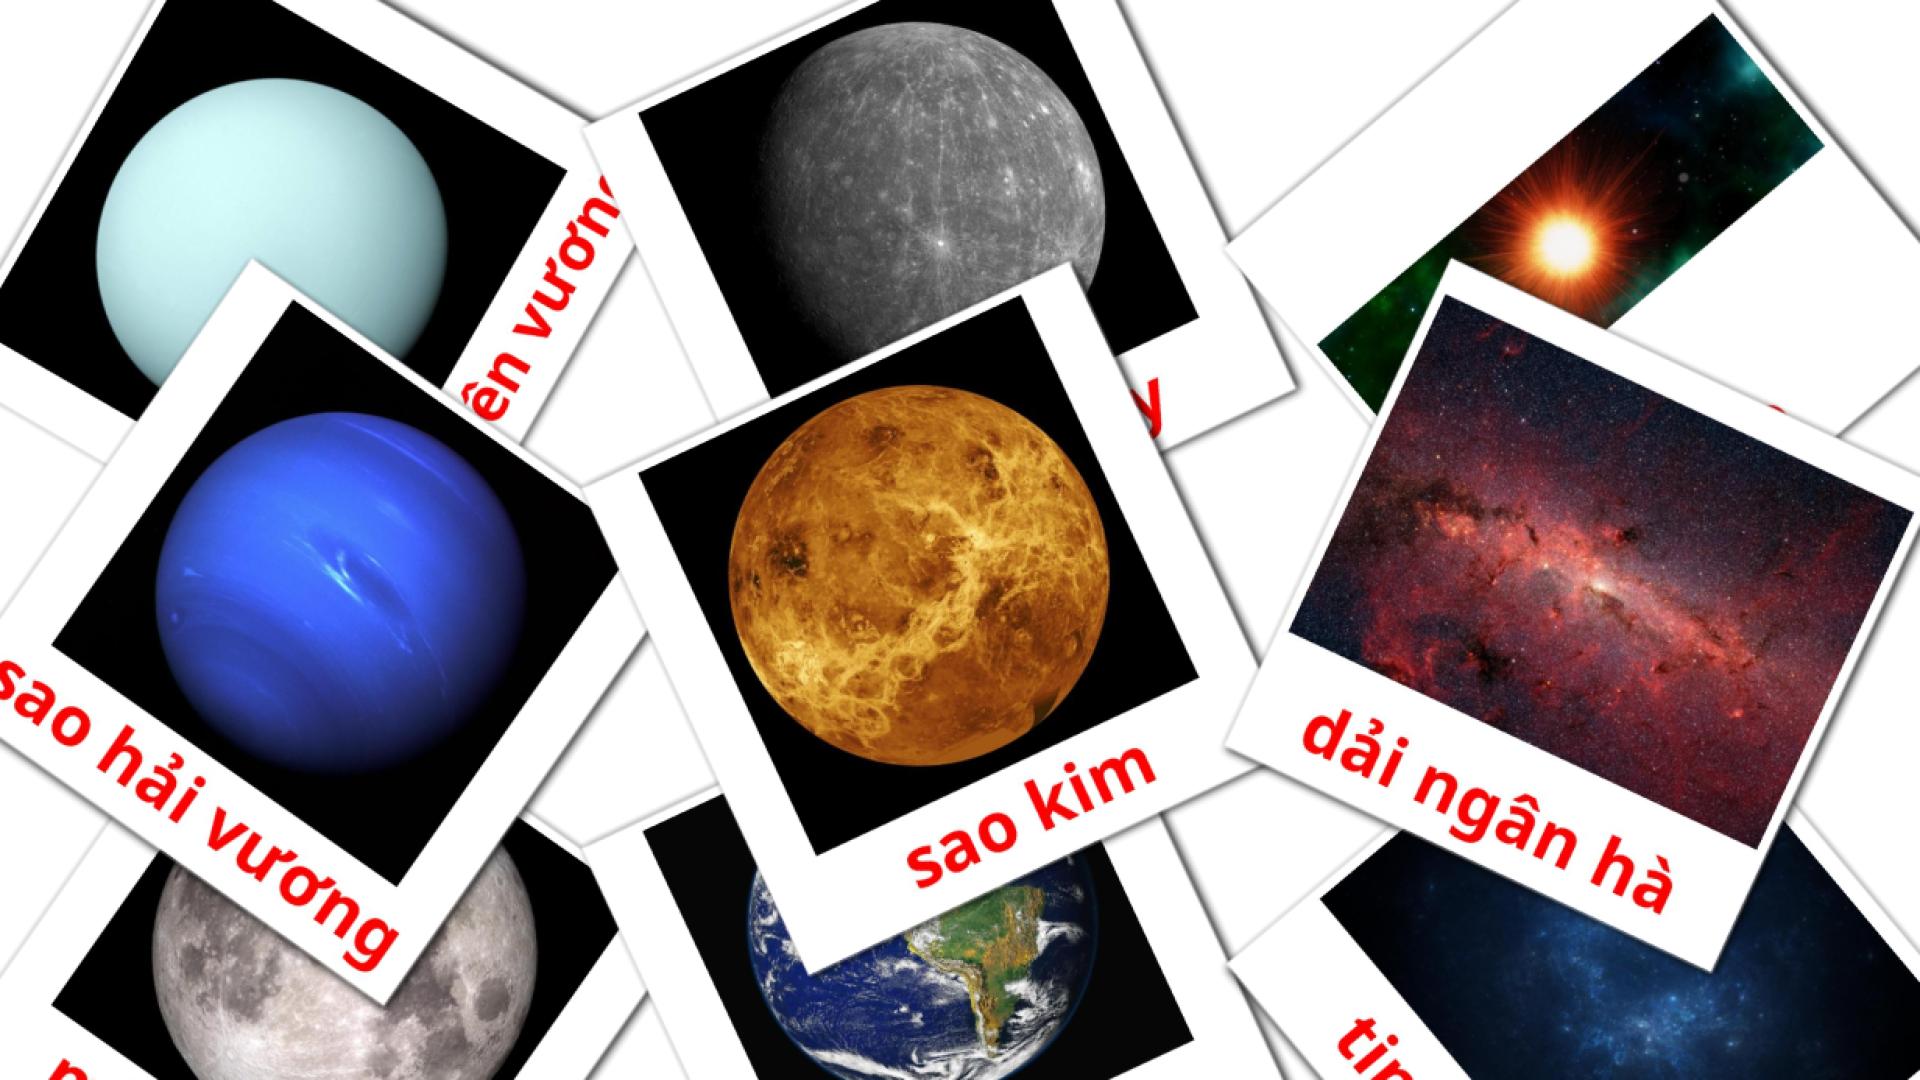 21 Hệ Mặt Trời flashcards